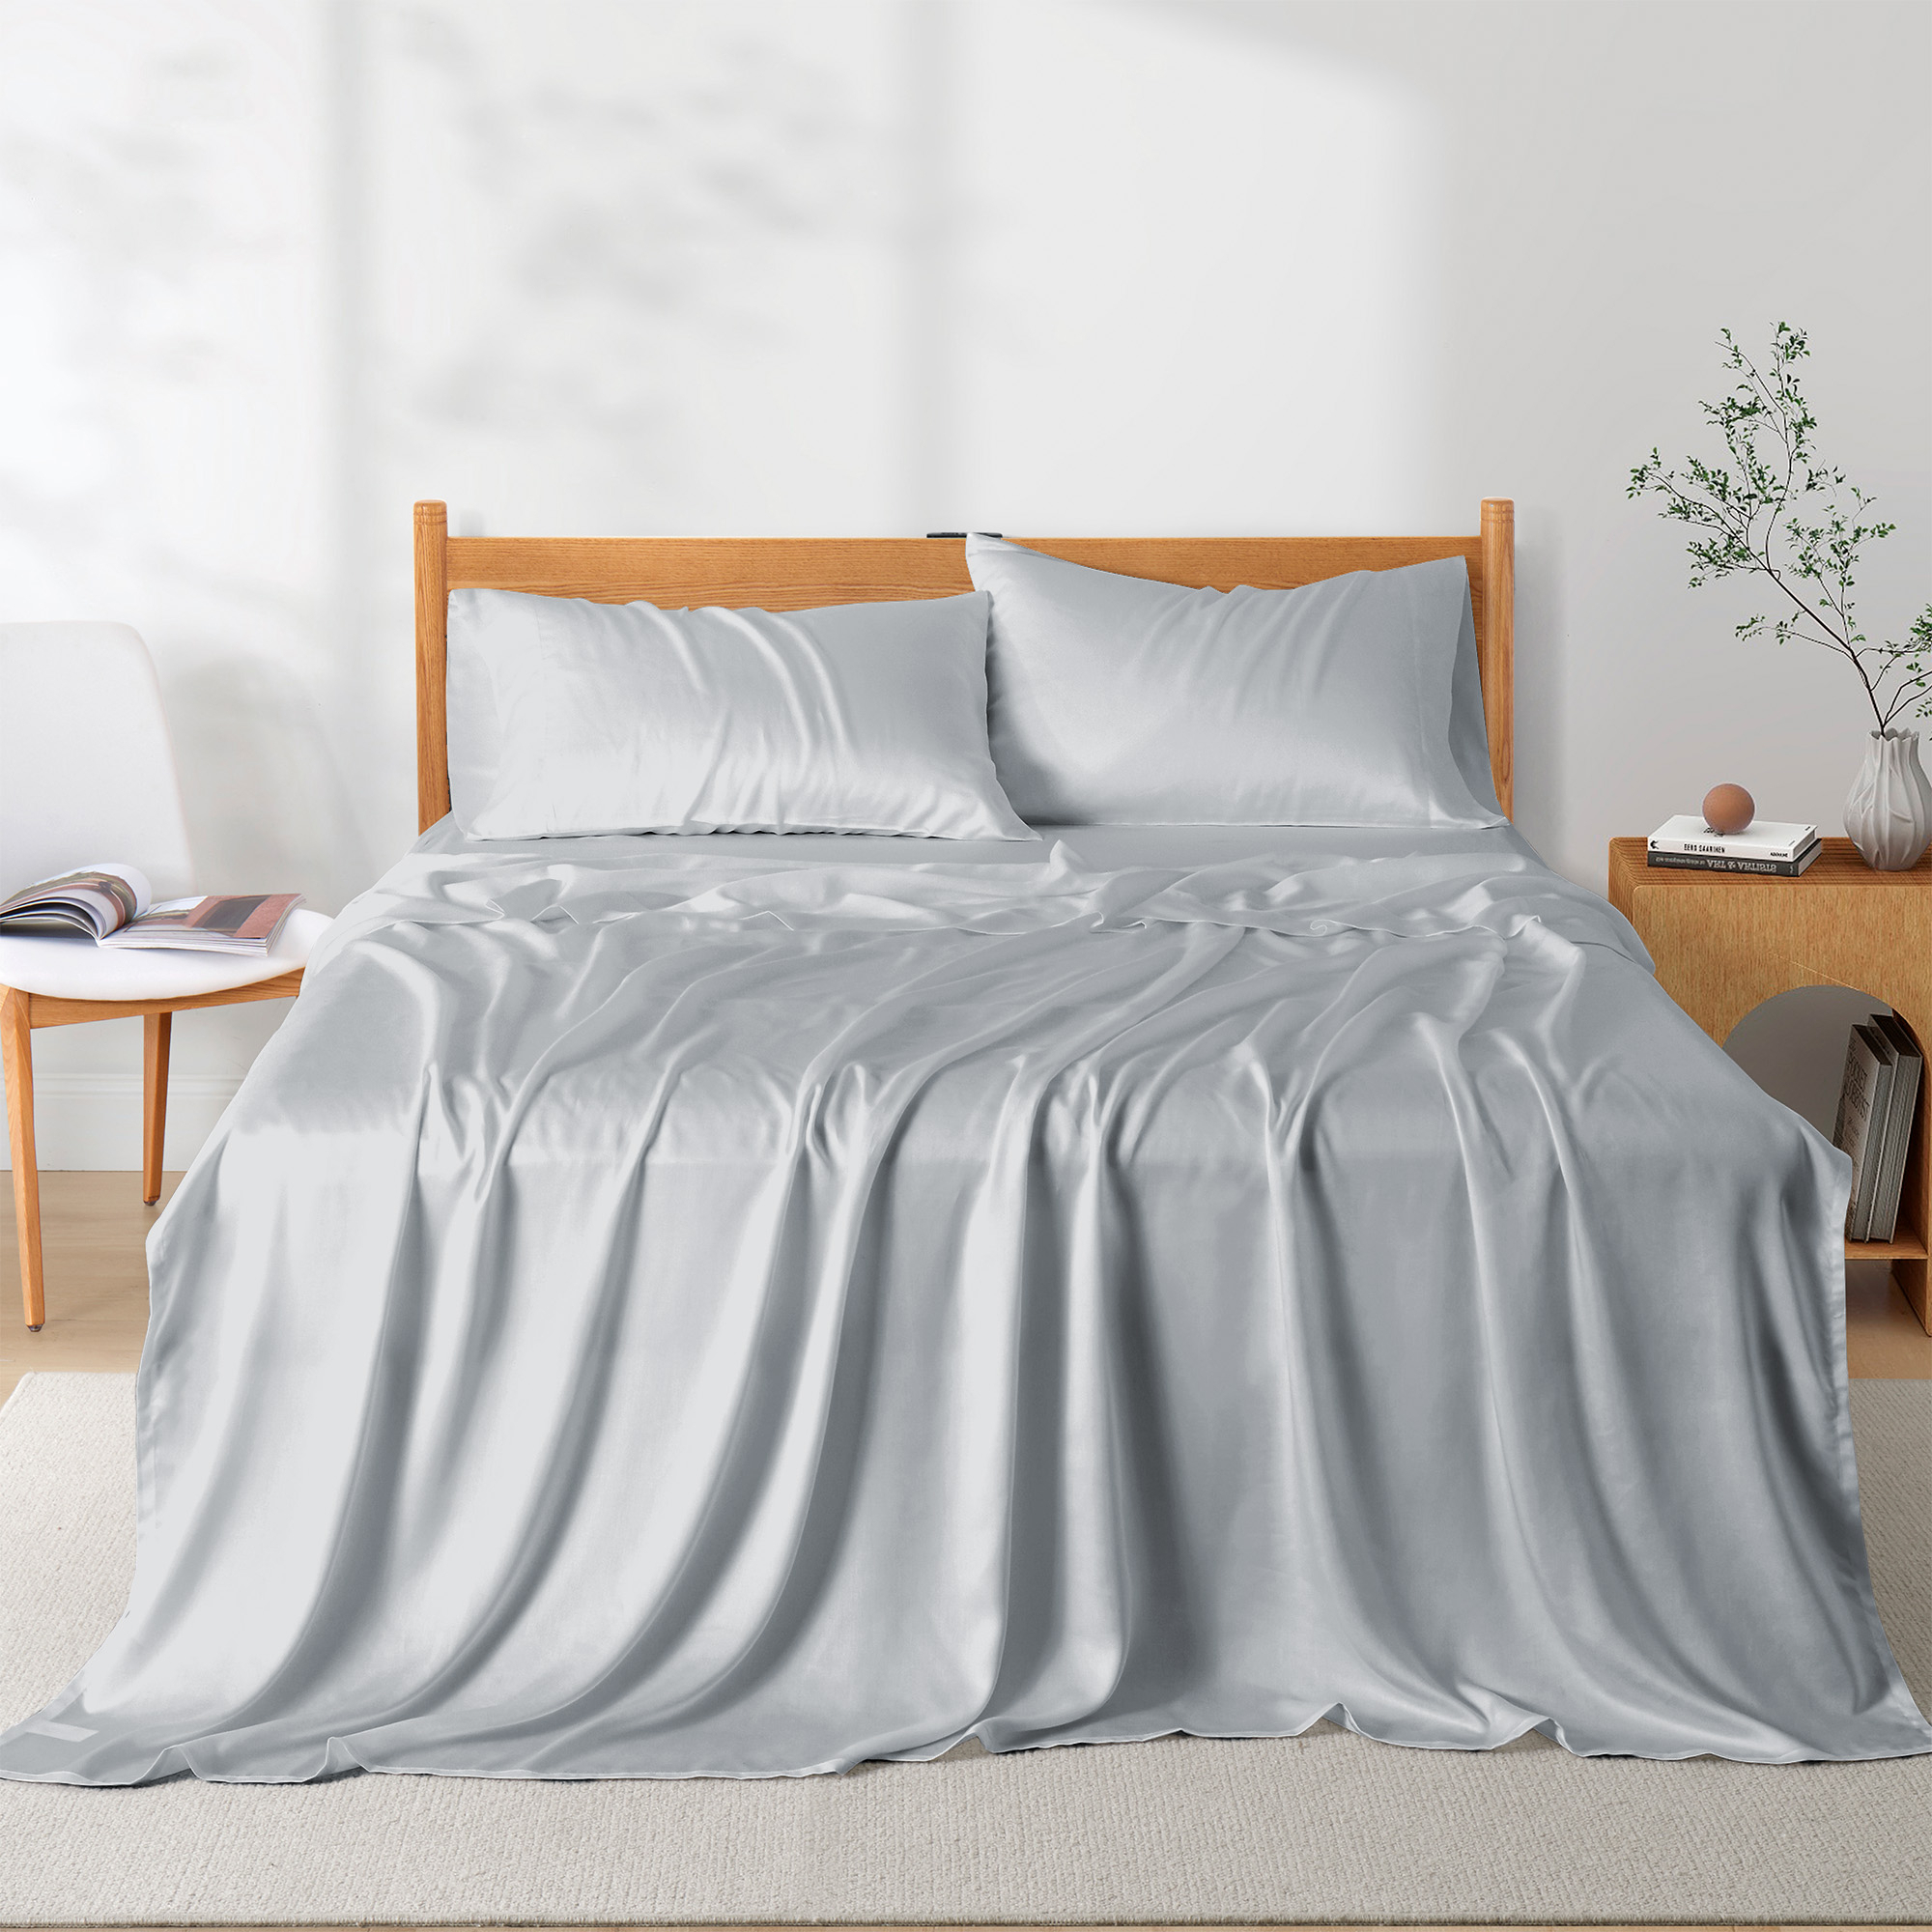 Silky Soft TENCELâ¢ Lyocell Cooling Sheet Set-Breathability And Moisture-wicking Bedding Set - Quiet Grey, King